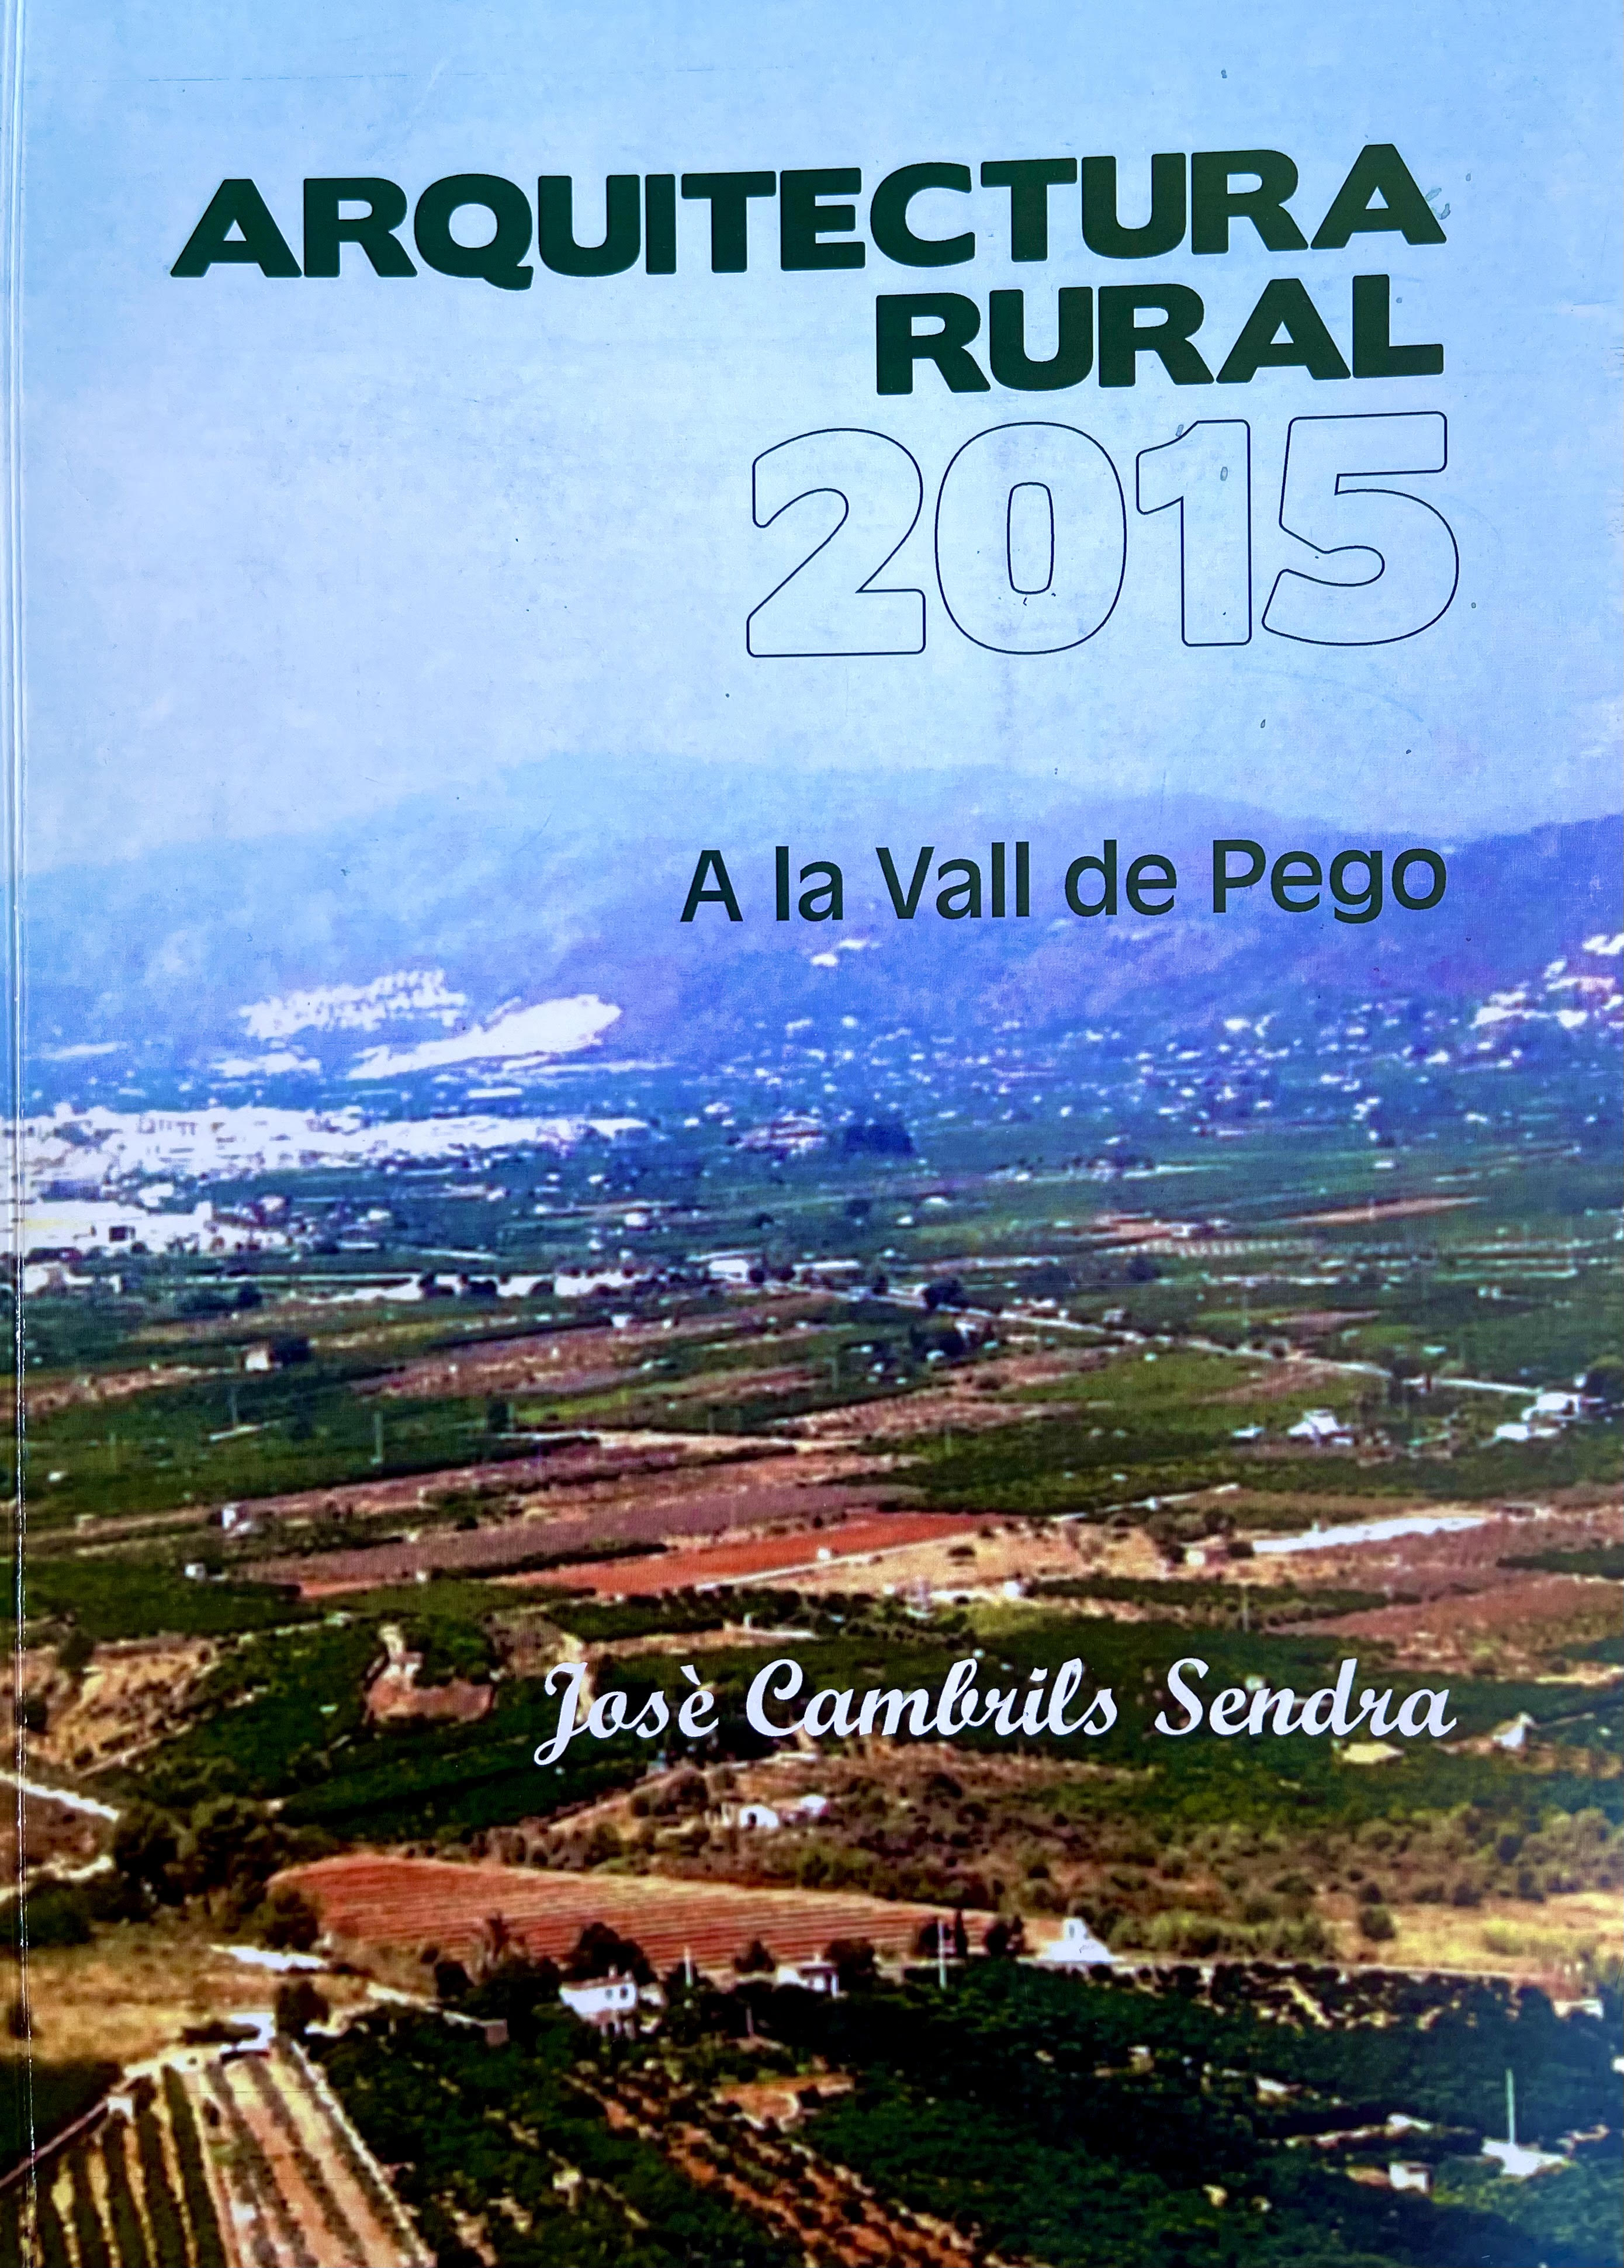 Arquitectura rural 2015. A la Vall de Pego.